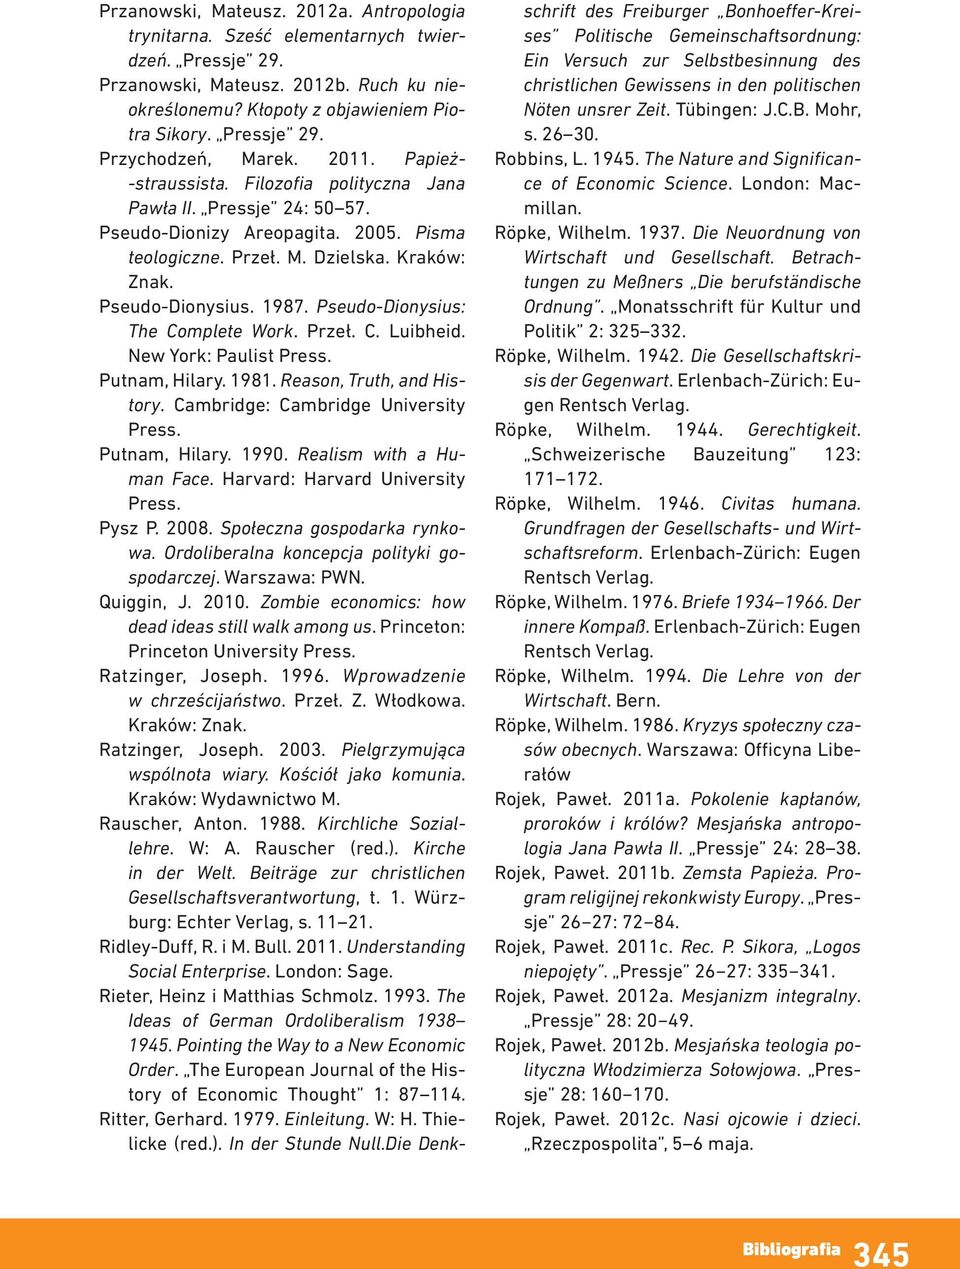 Pseudo-Dionysius: The Complete Work. Przeł. C. Luibheid. New York: Paulist Press. Putnam, Hilary. 1981. Reason, Truth, and History. Cambridge: Cambridge University Press. Putnam, Hilary. 1990.